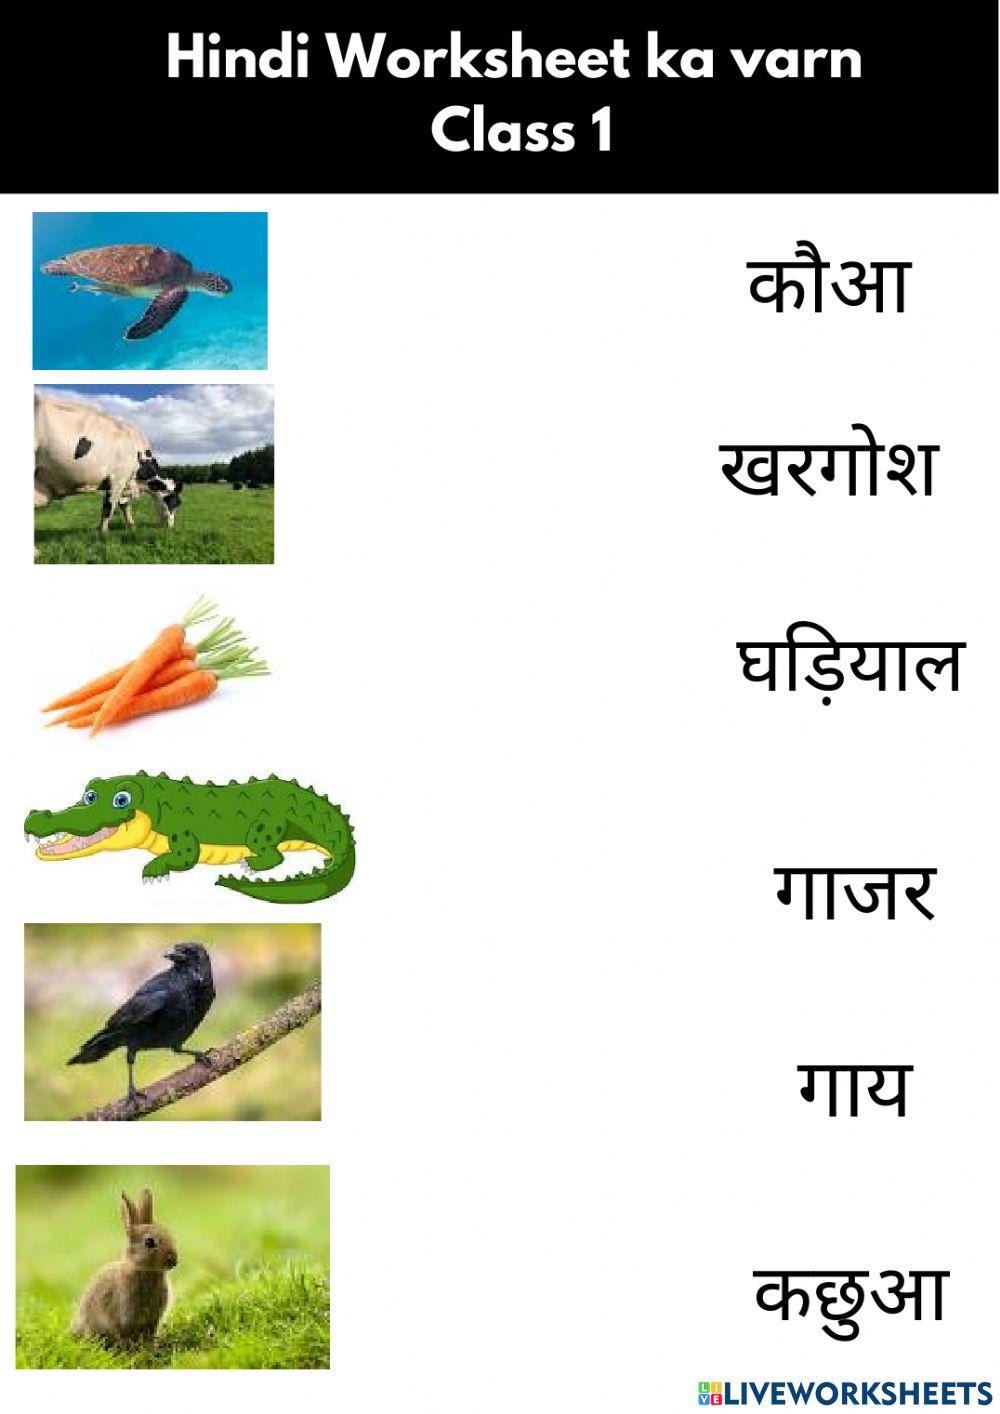 Hindi worksheet ka varn